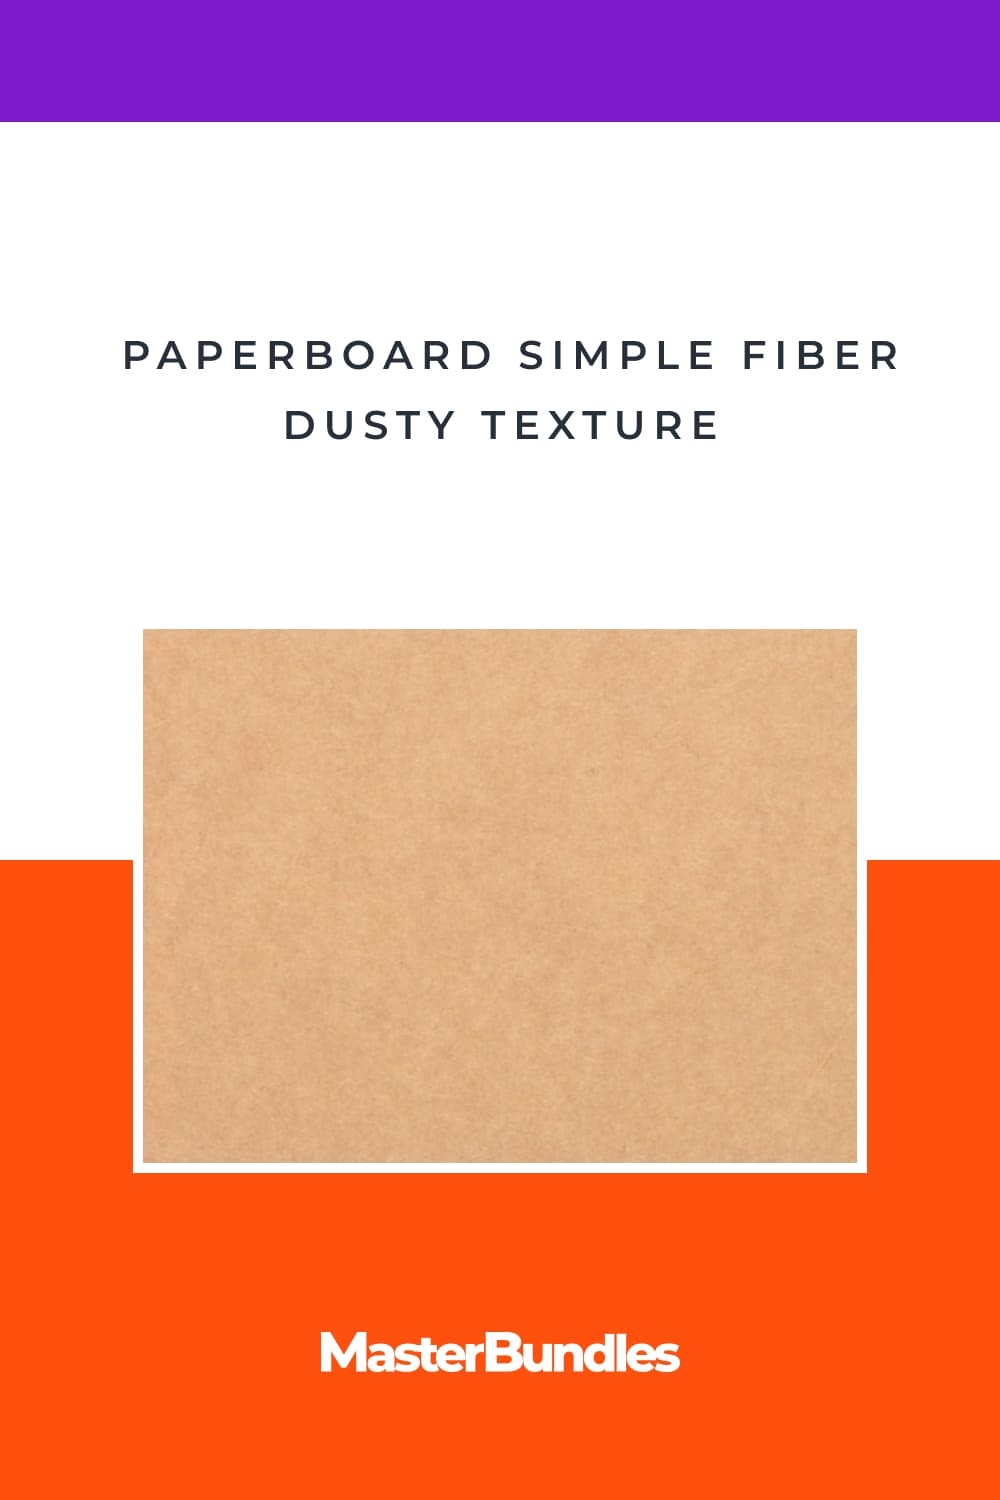 Paperboard simple fiber dusty texture.